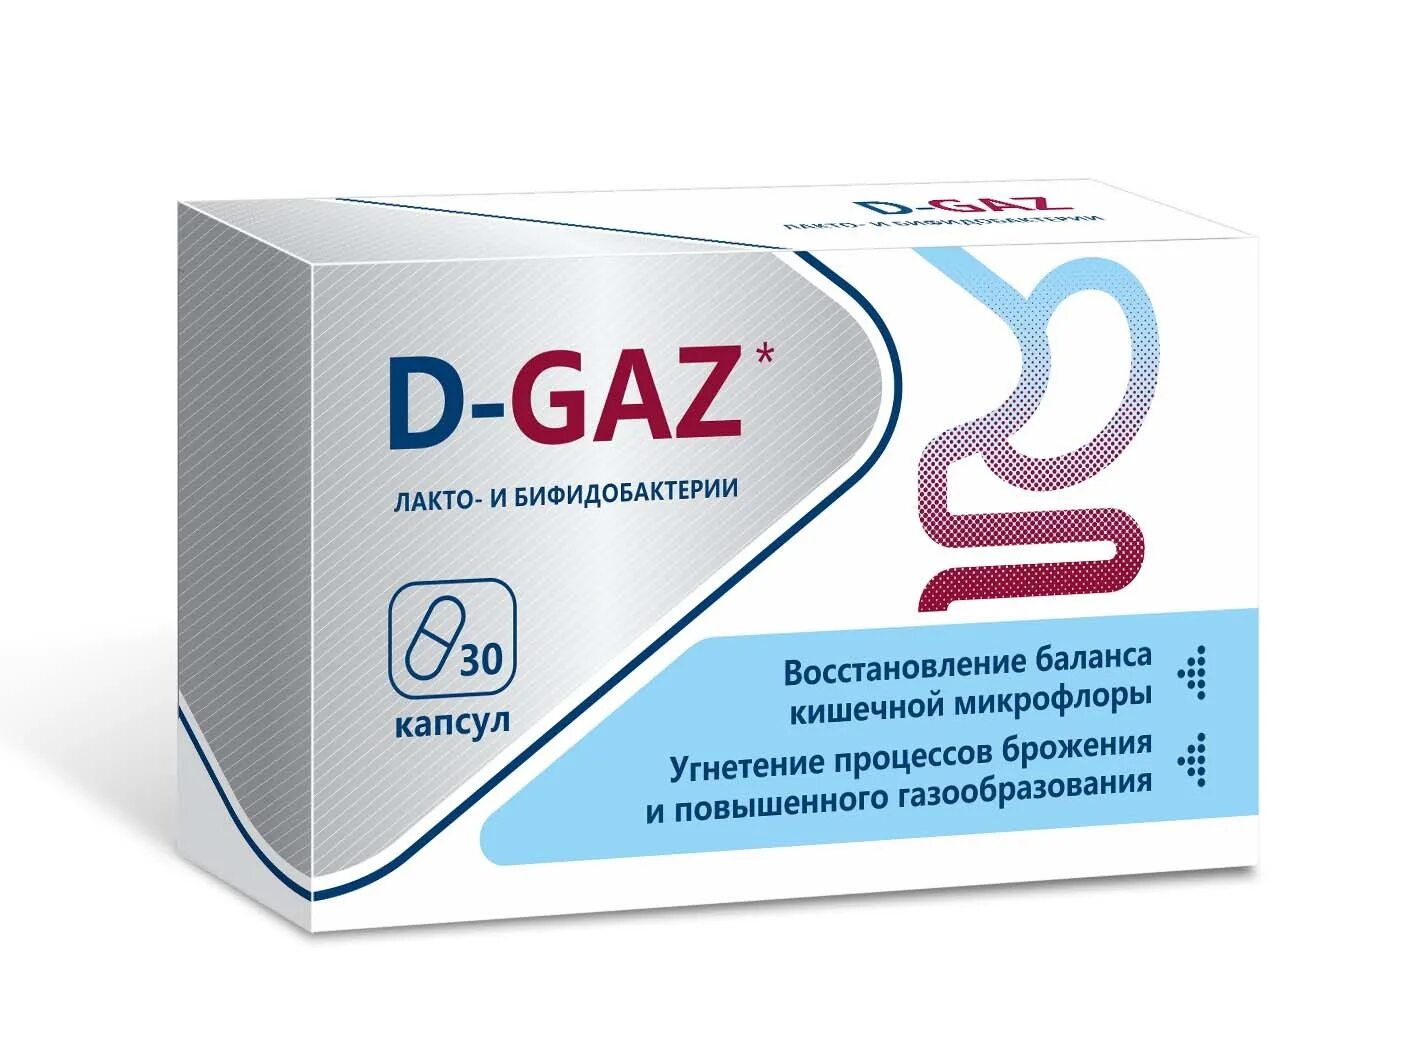 Лакто бифидобактерии купить. Д-ГАЗ синбиотик при вздутии живота капс. D-gaz капсулы. Д-ГАЗ лакто и бифидобактерии. D gaz лакто и бифидобактерии.